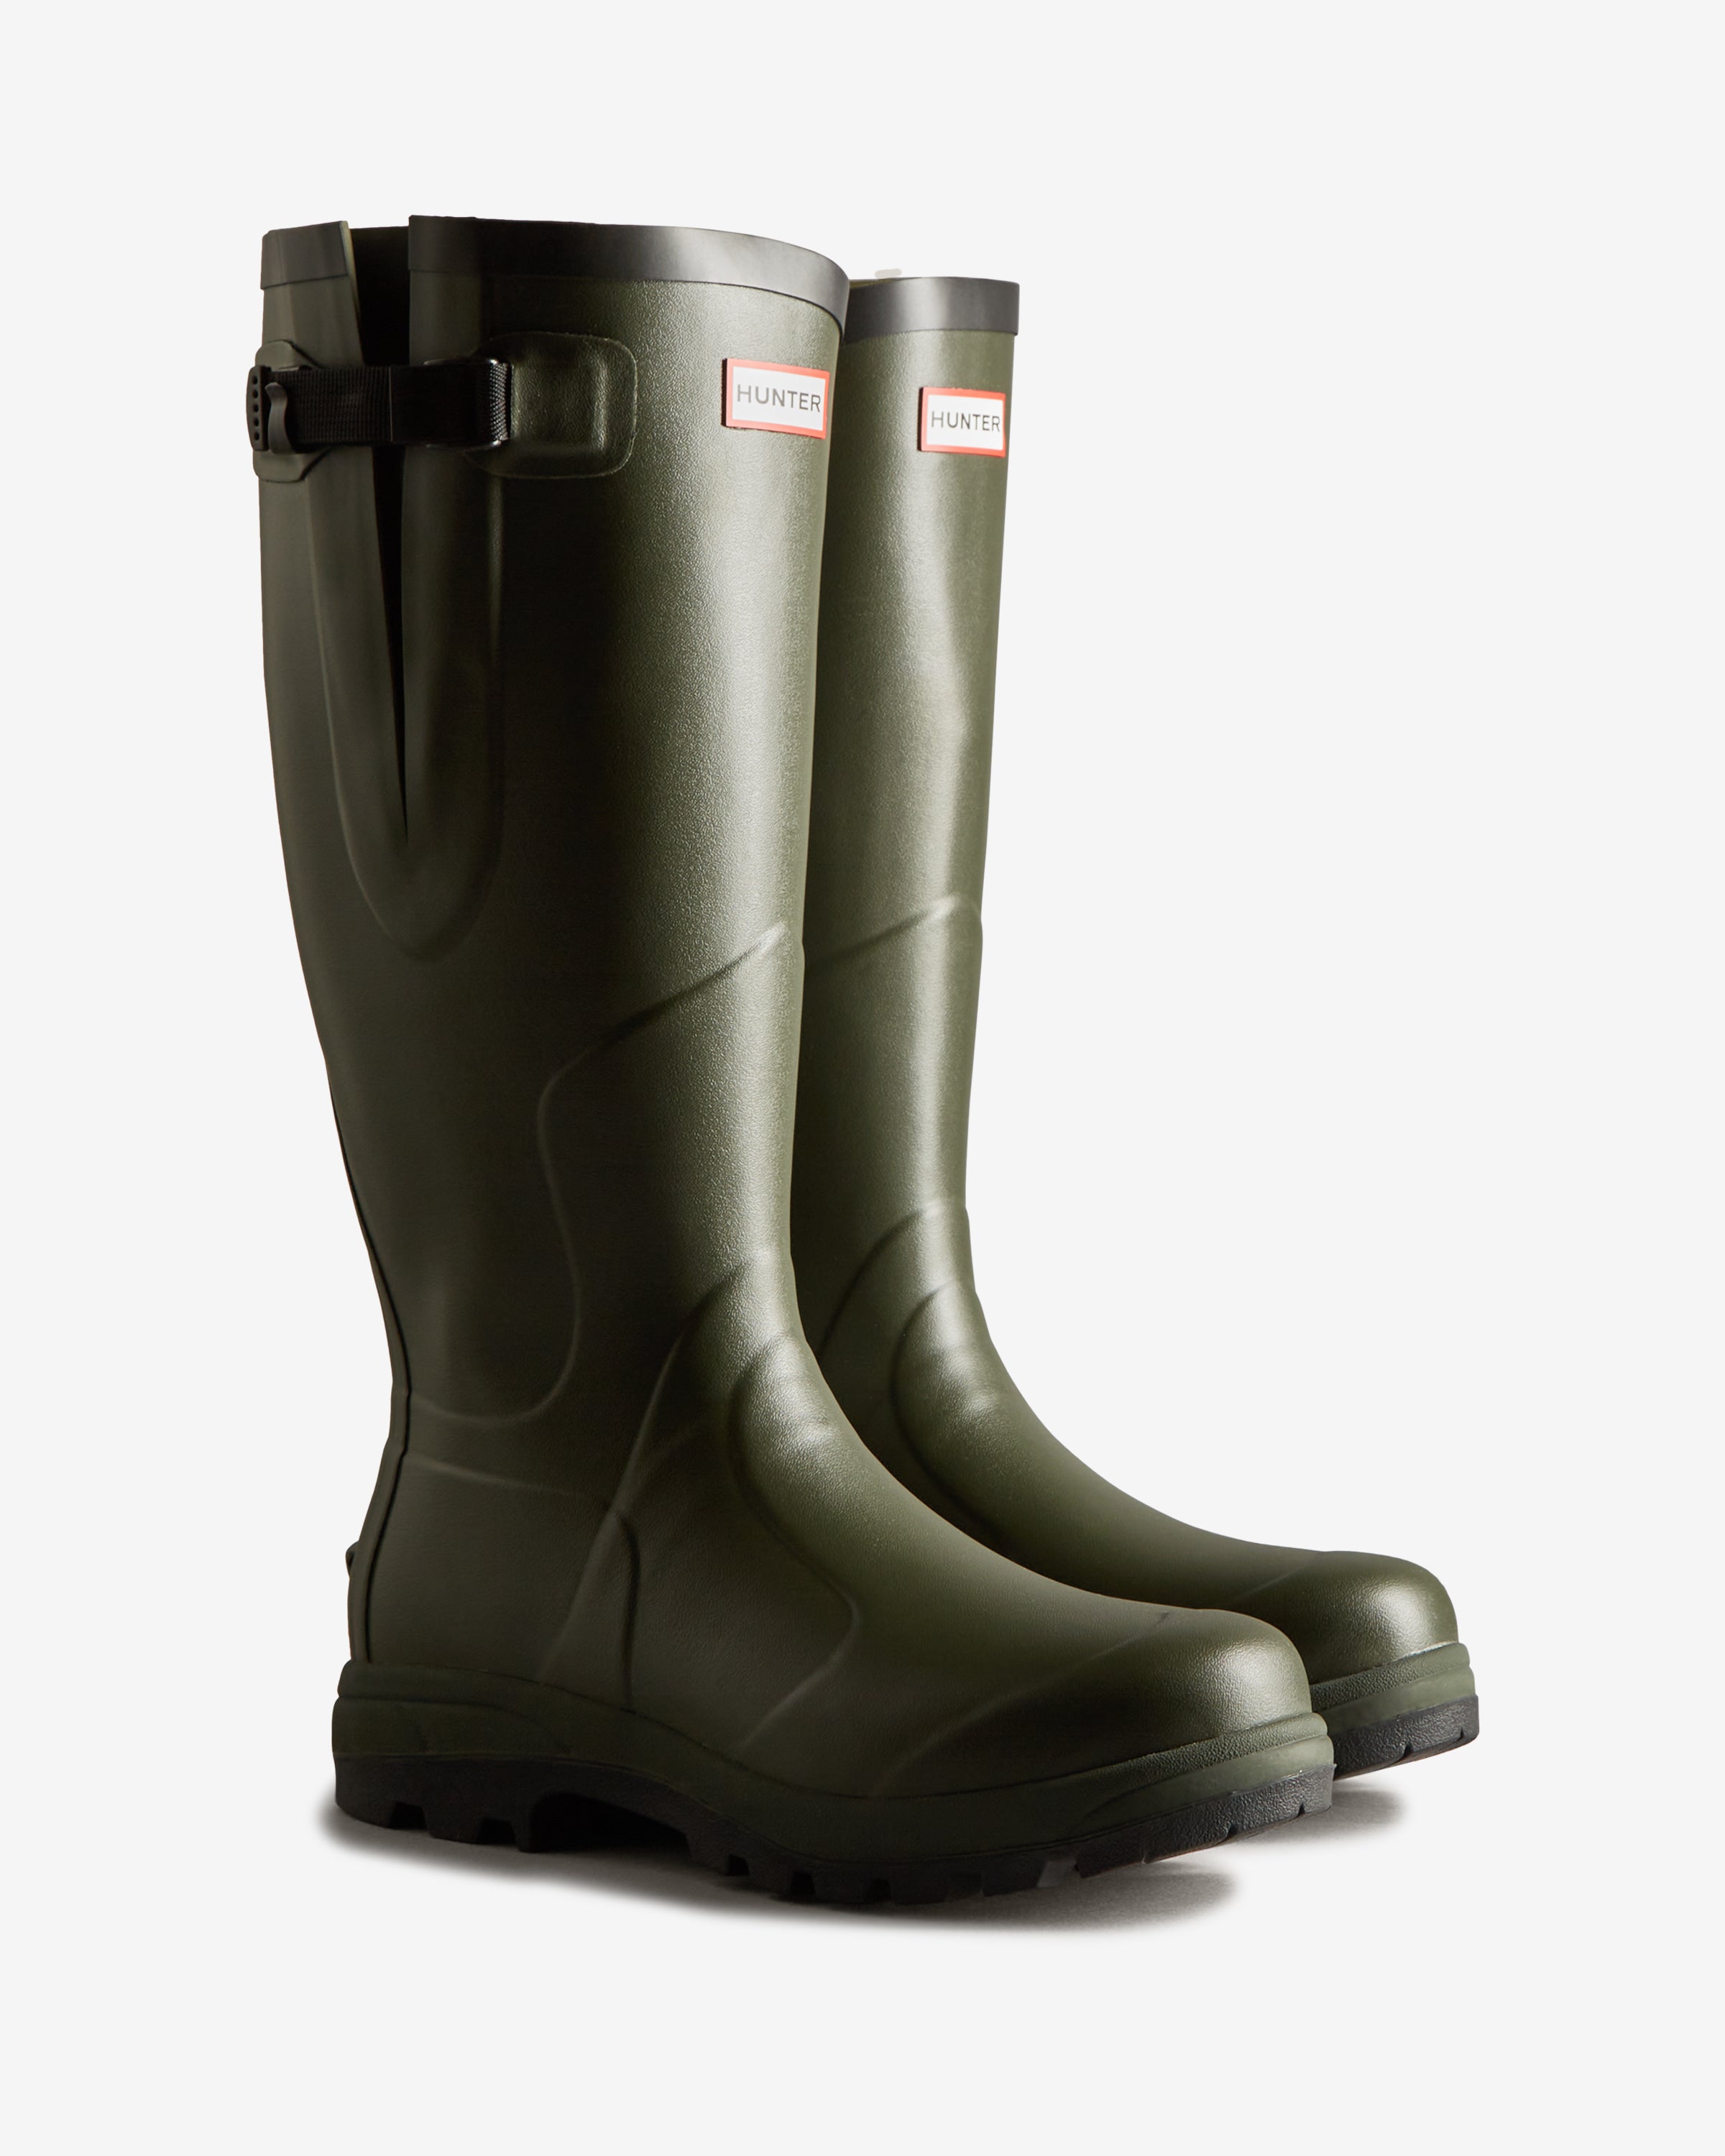 Unisex Balmoral Classic Side Adjustable Wellington Boots – Hunter 